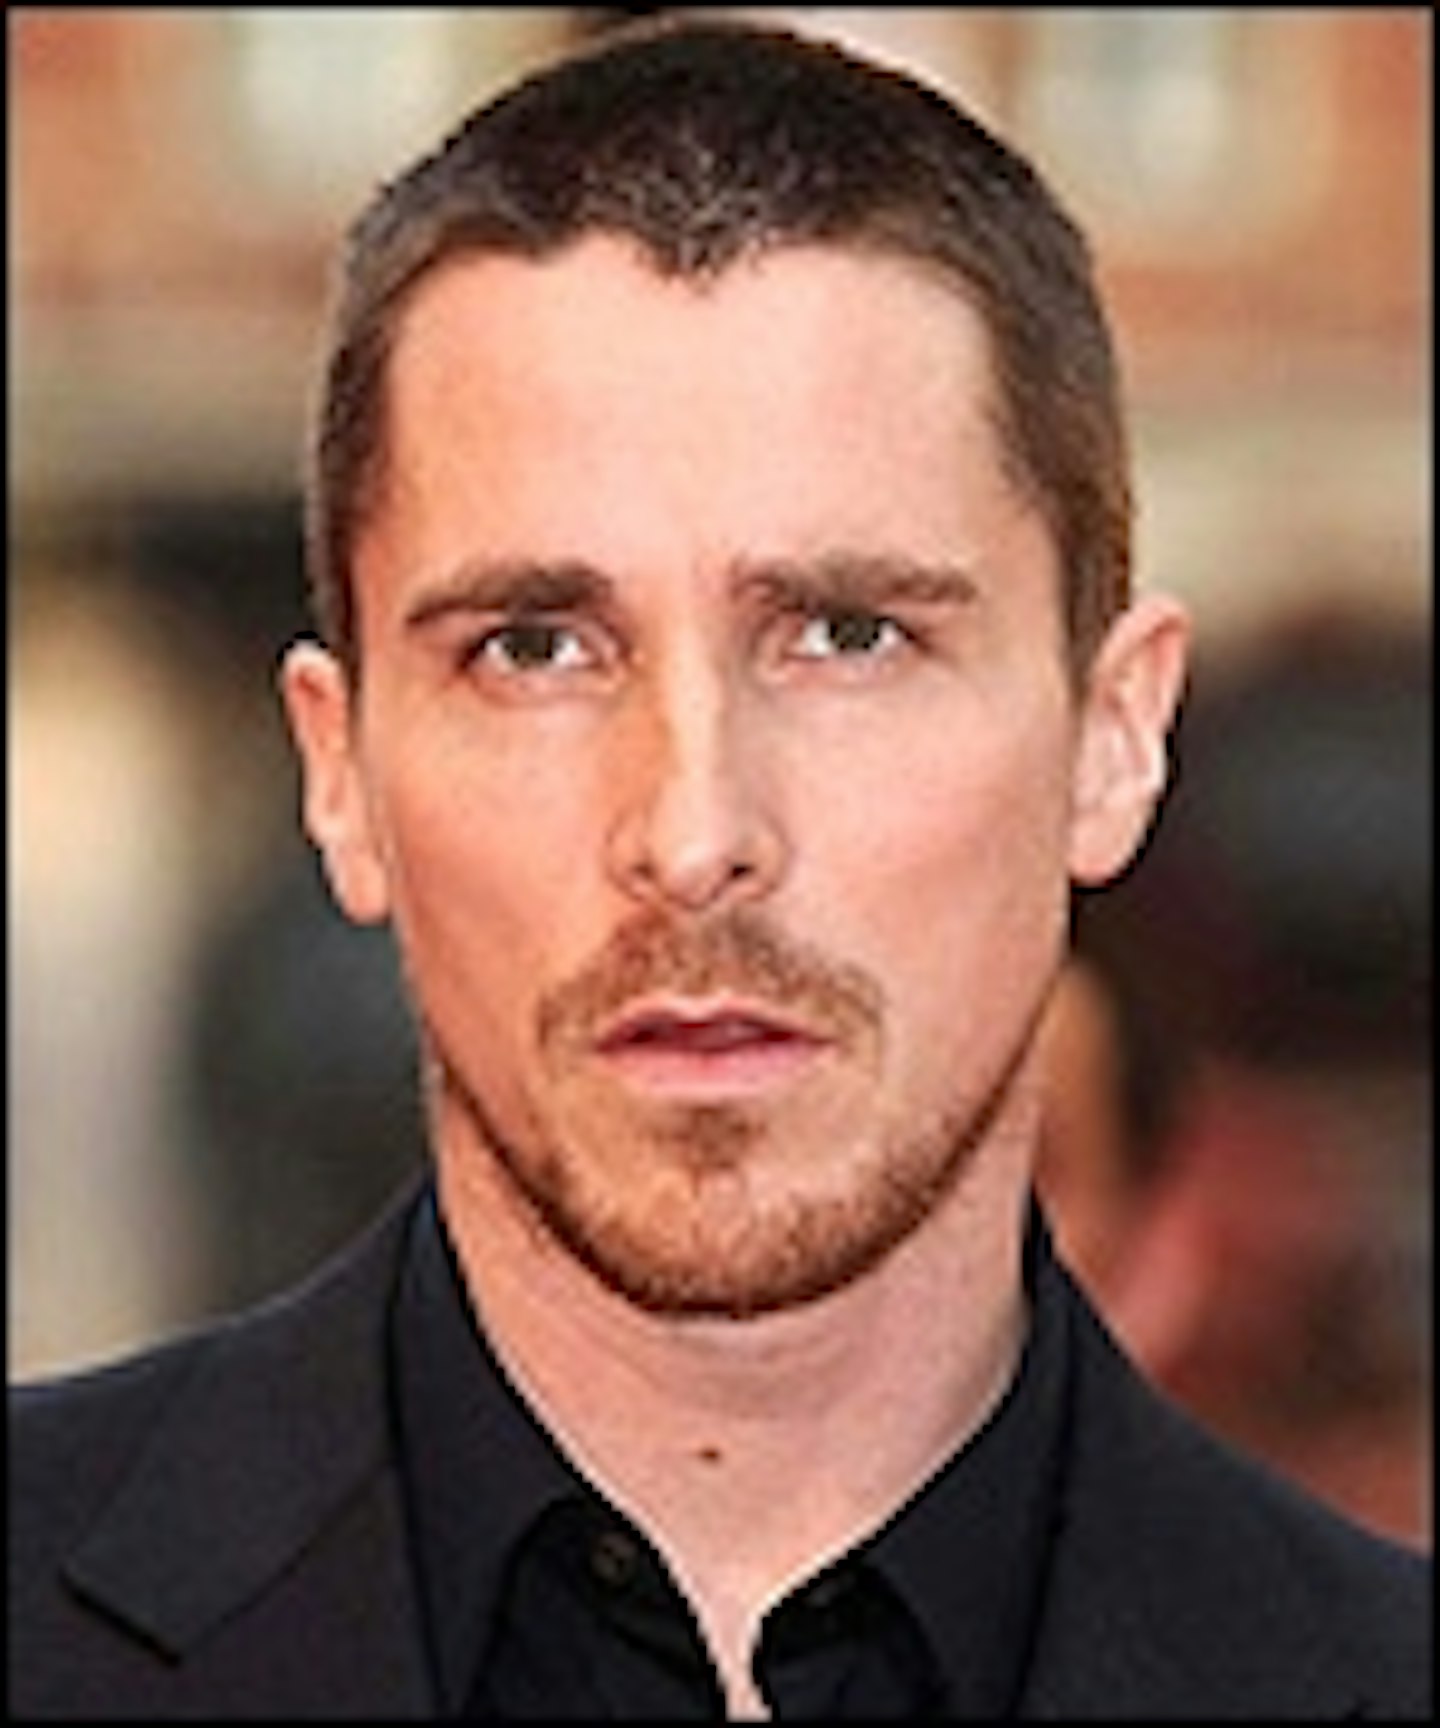 Christian Bale On For Nanjing Heroes